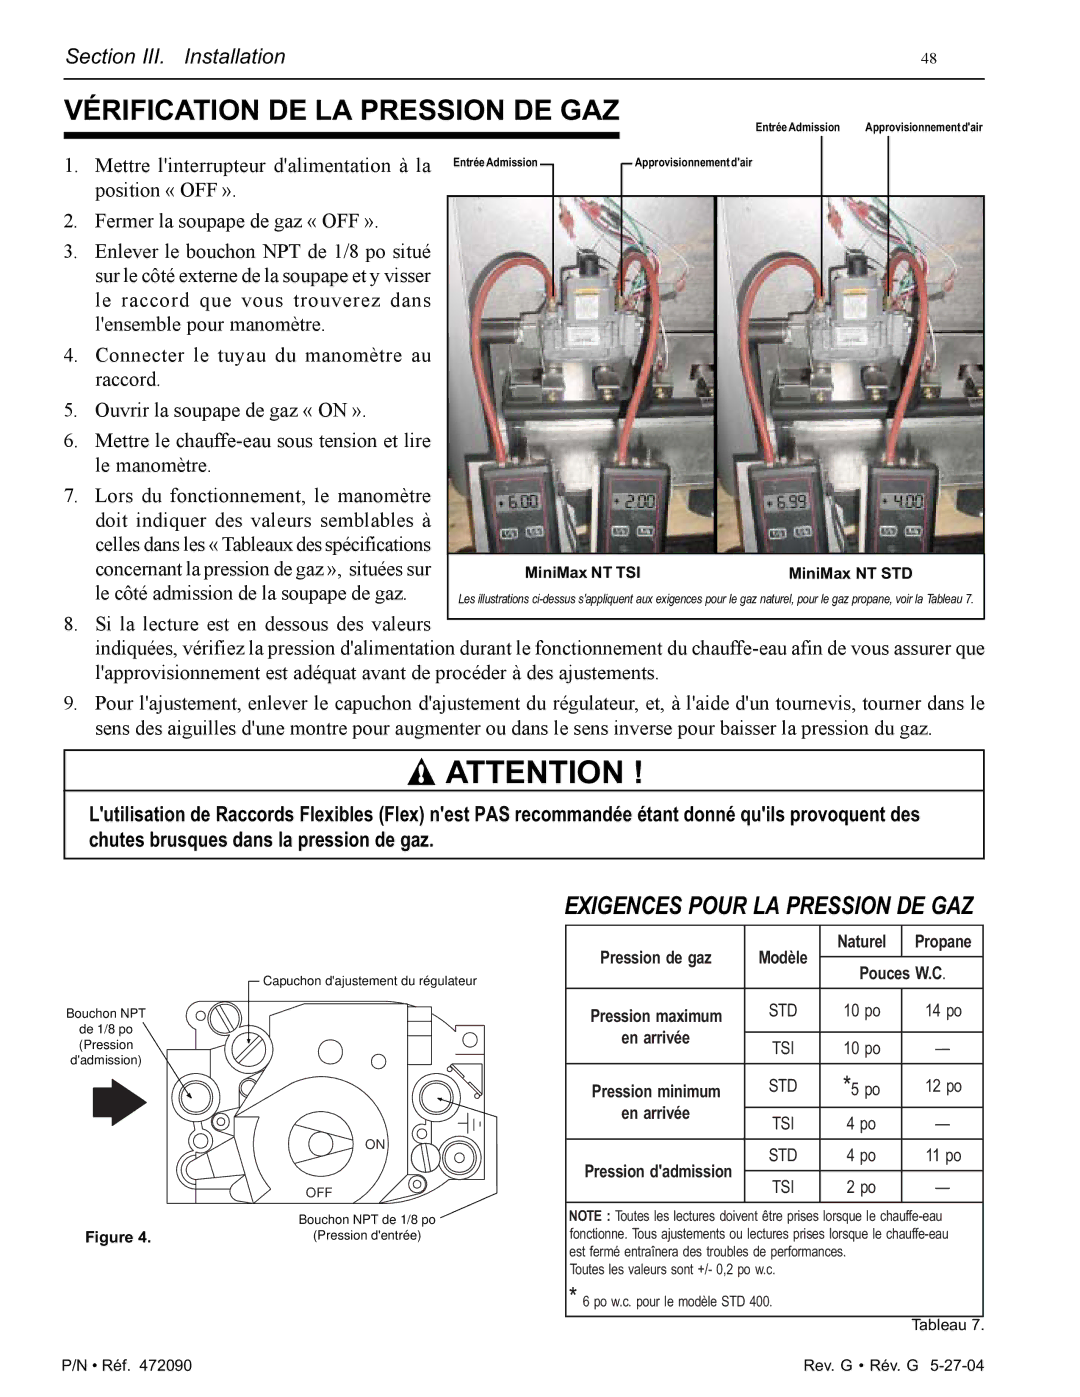 Pentair 200 installation manual Vérification DE LA Pression DE GAZ, Exigences Pour LA Pression DE GAZ 